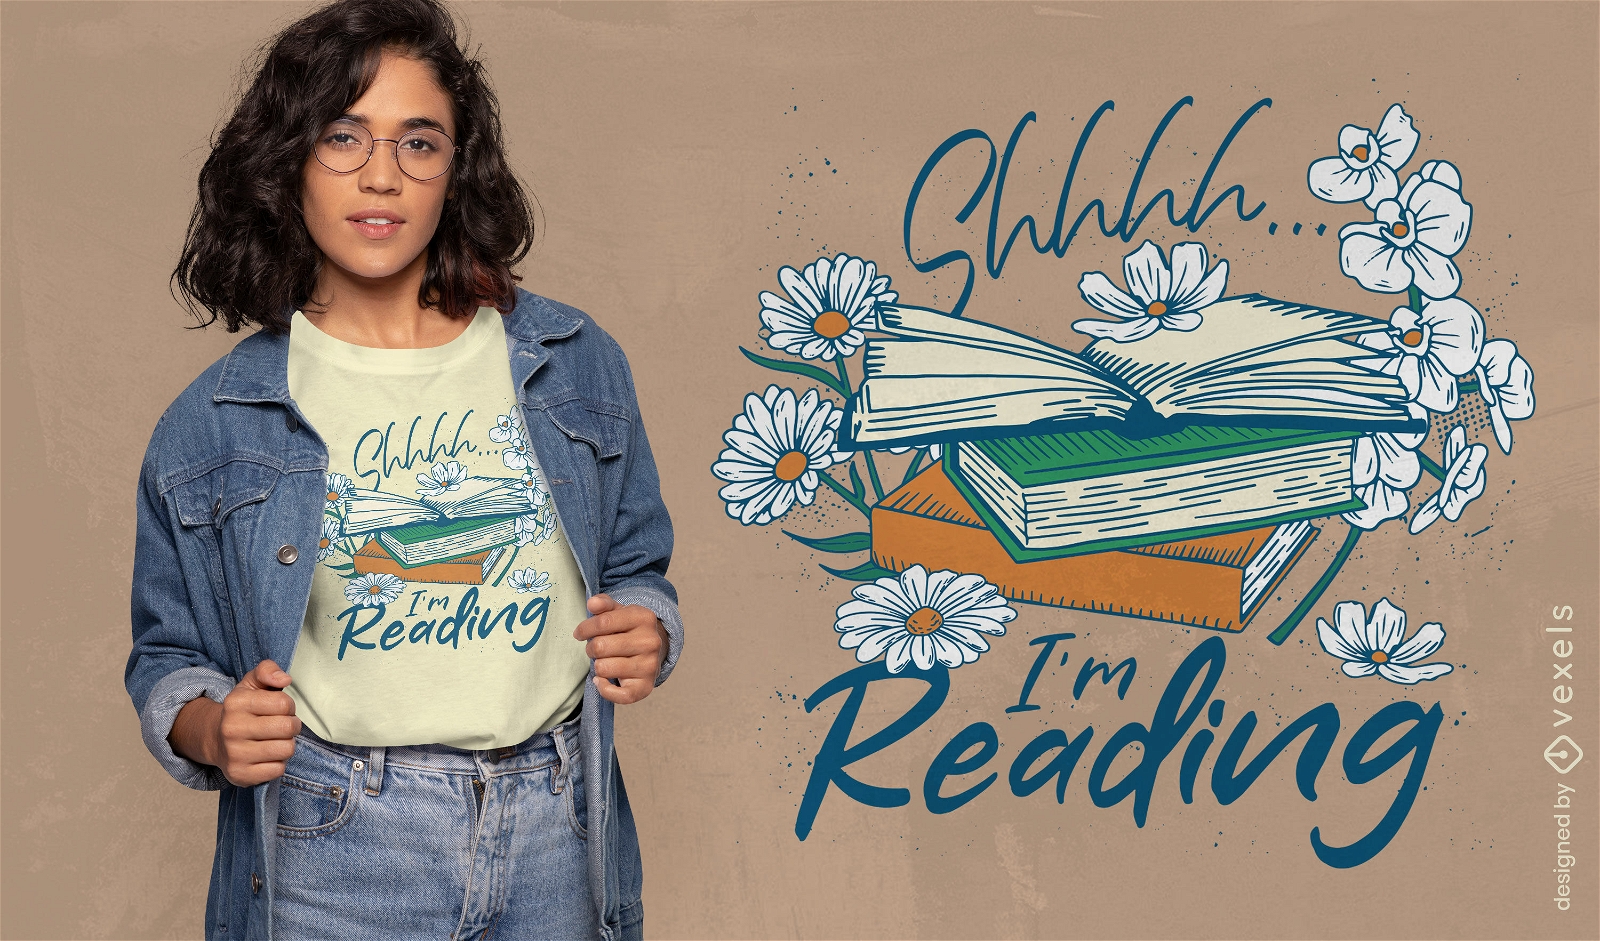 Dise?o de camiseta de lectura de libros y flores.